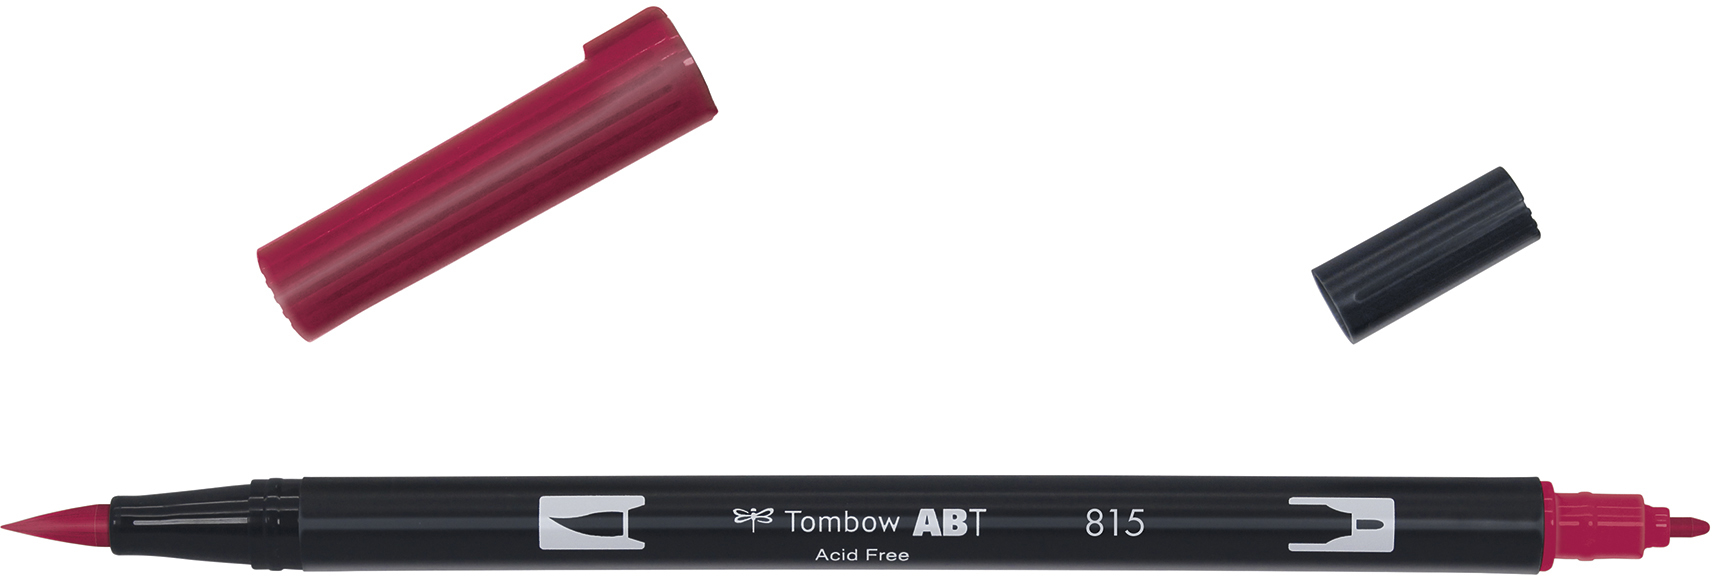 TOMBOW Dual Brush Pen ABT 815 kirschrot